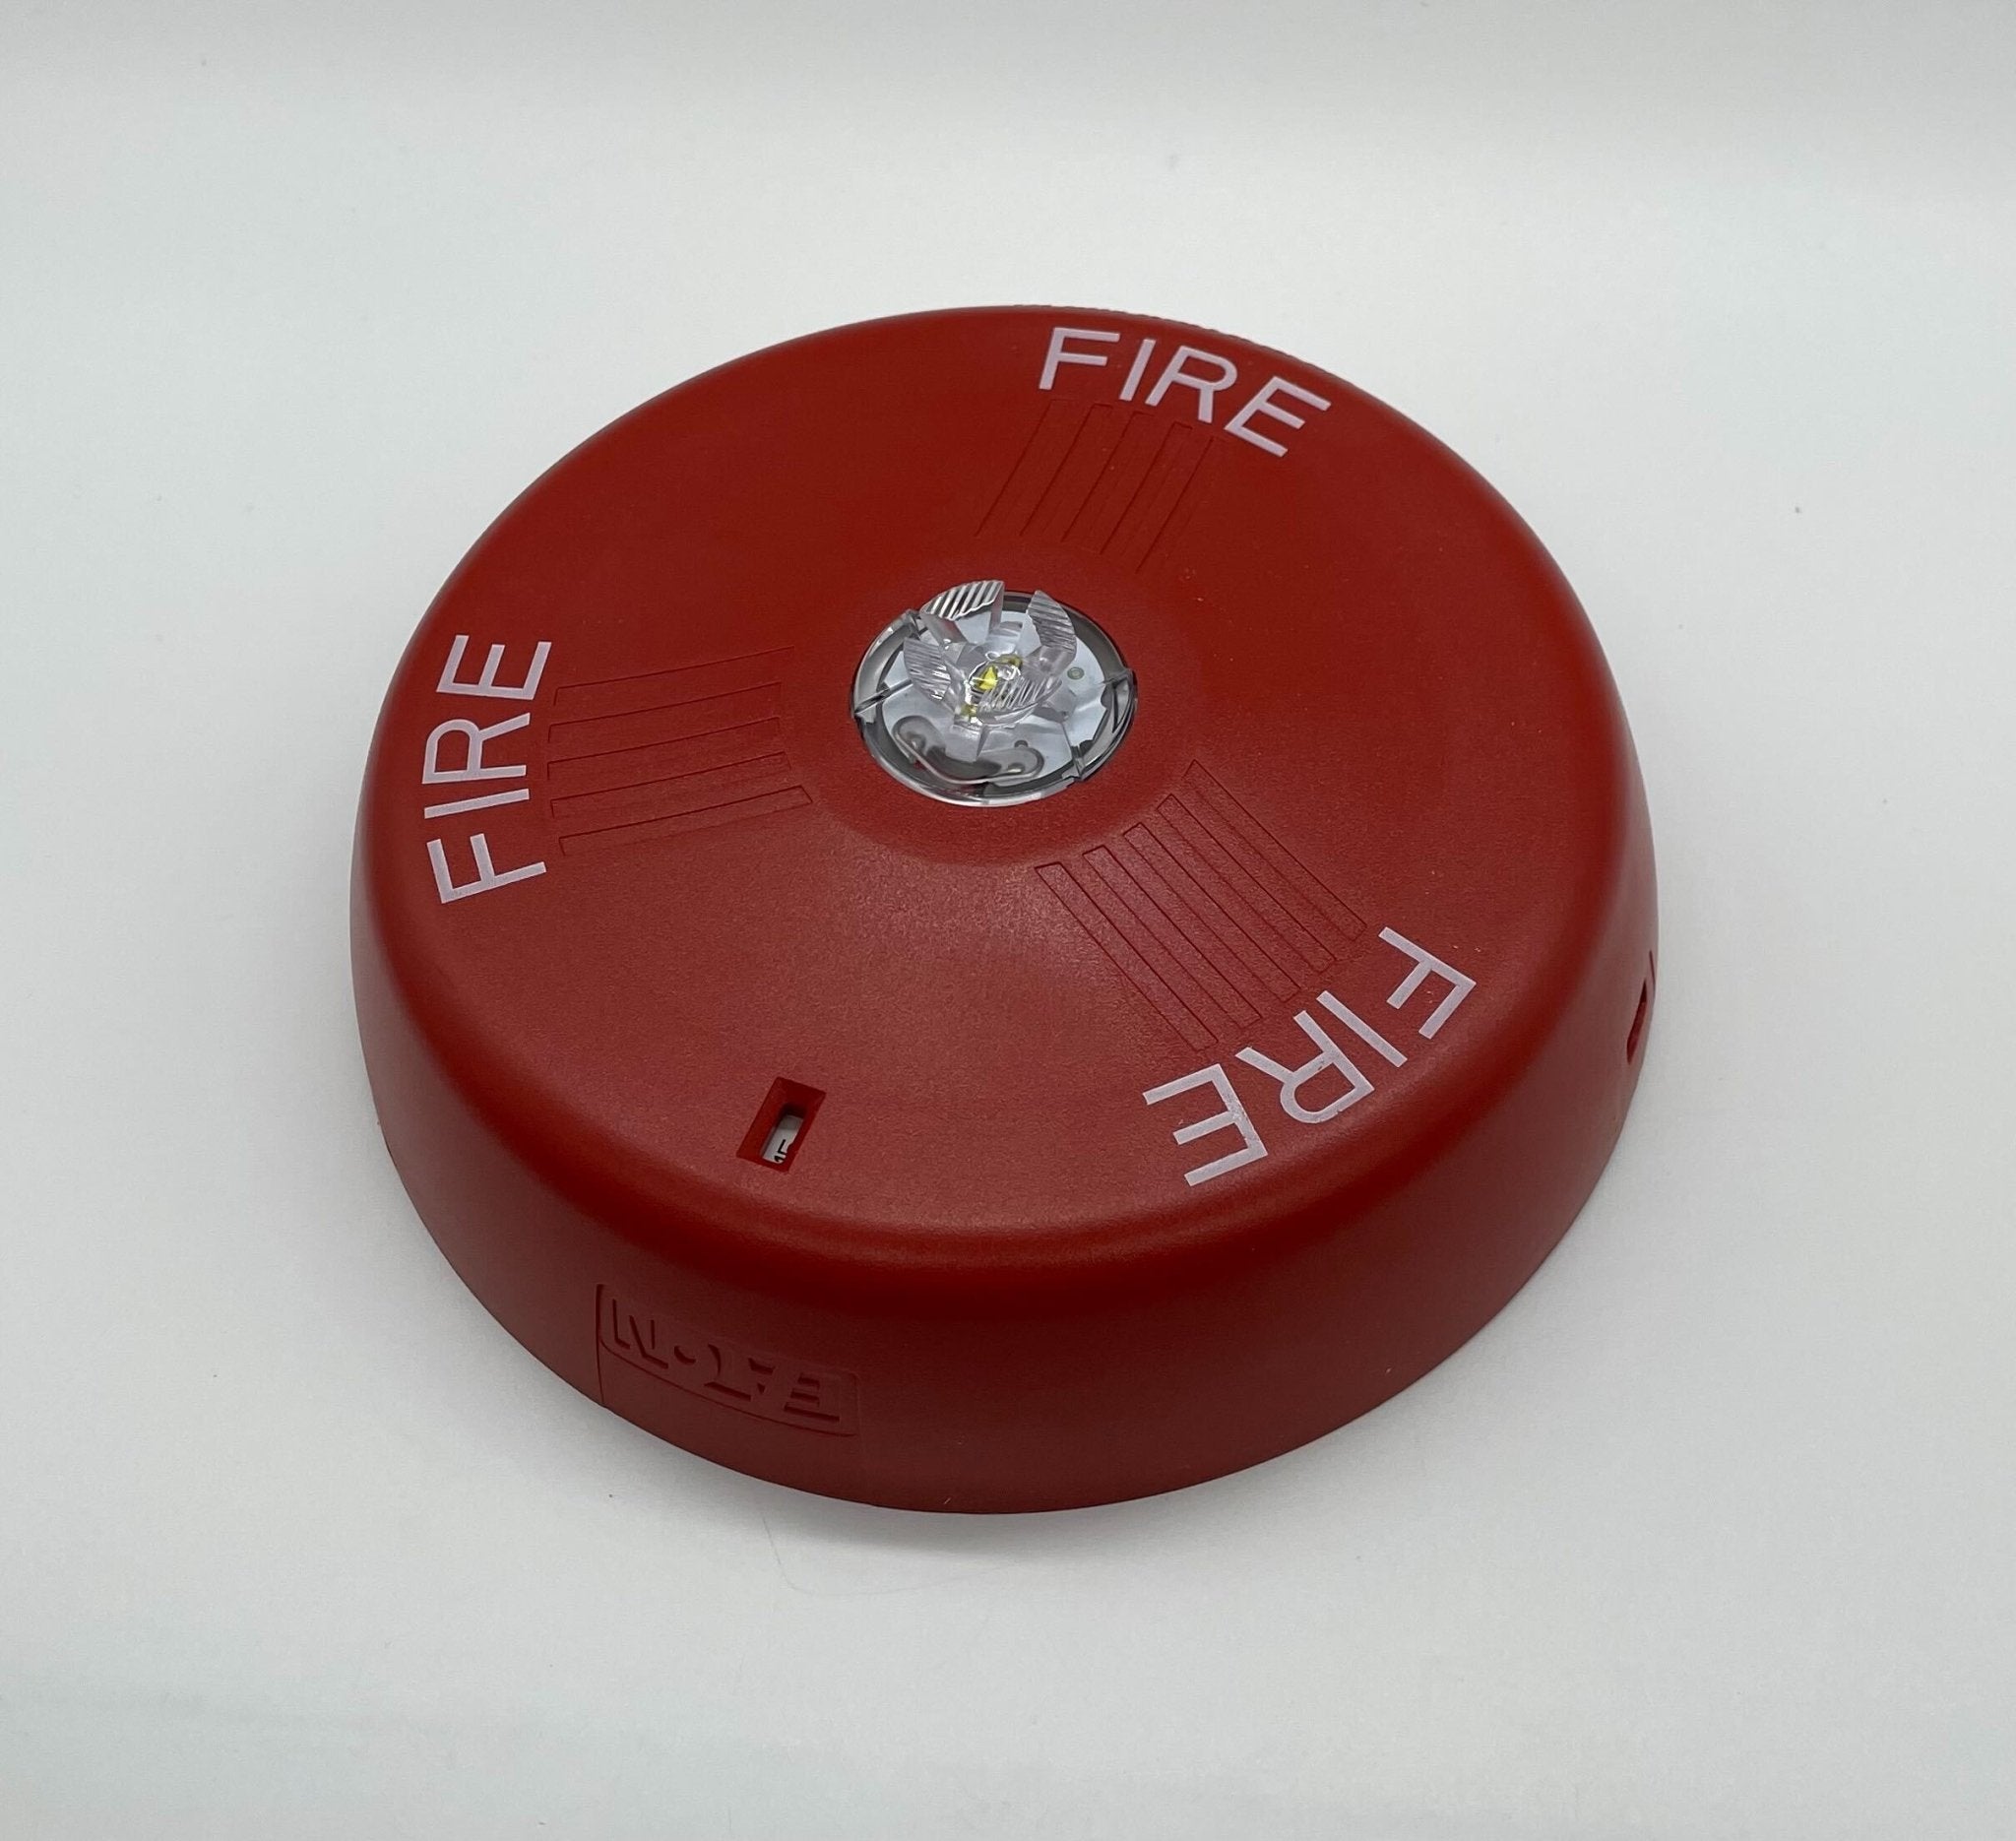 Wheelock LSTRC3 - The Fire Alarm Supplier